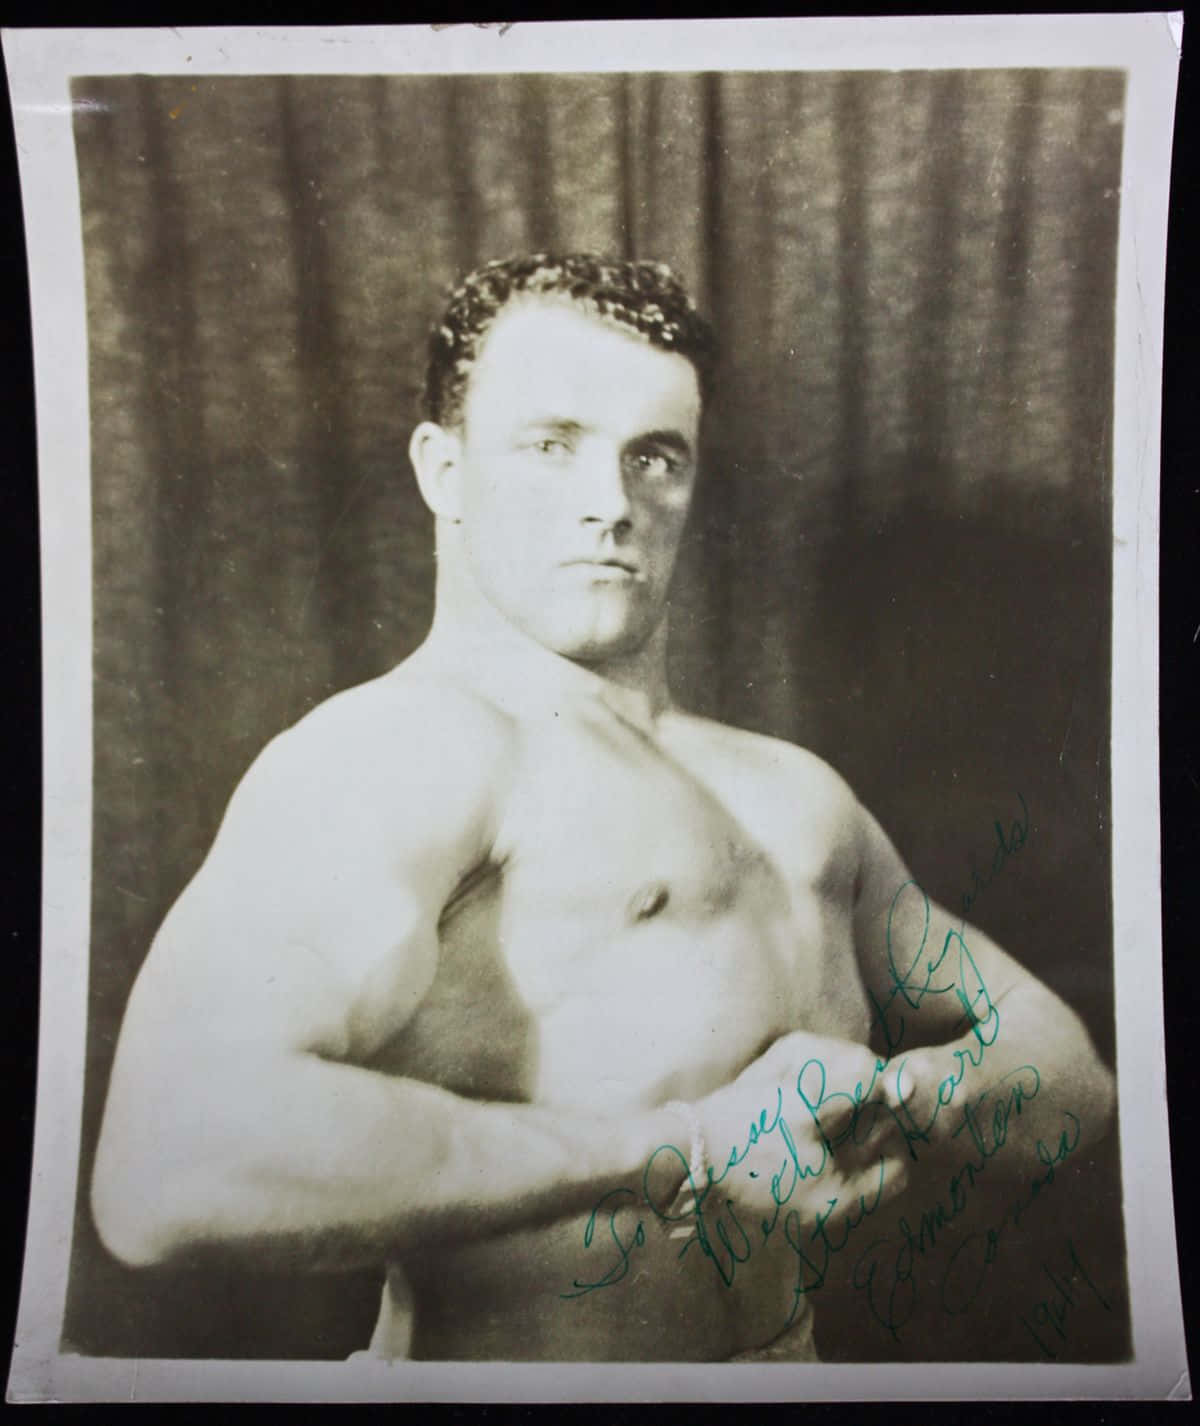 Iconicaretrospettiva: Stu Hart, Leggendario Wrestler Professionista Canadese. Sfondo